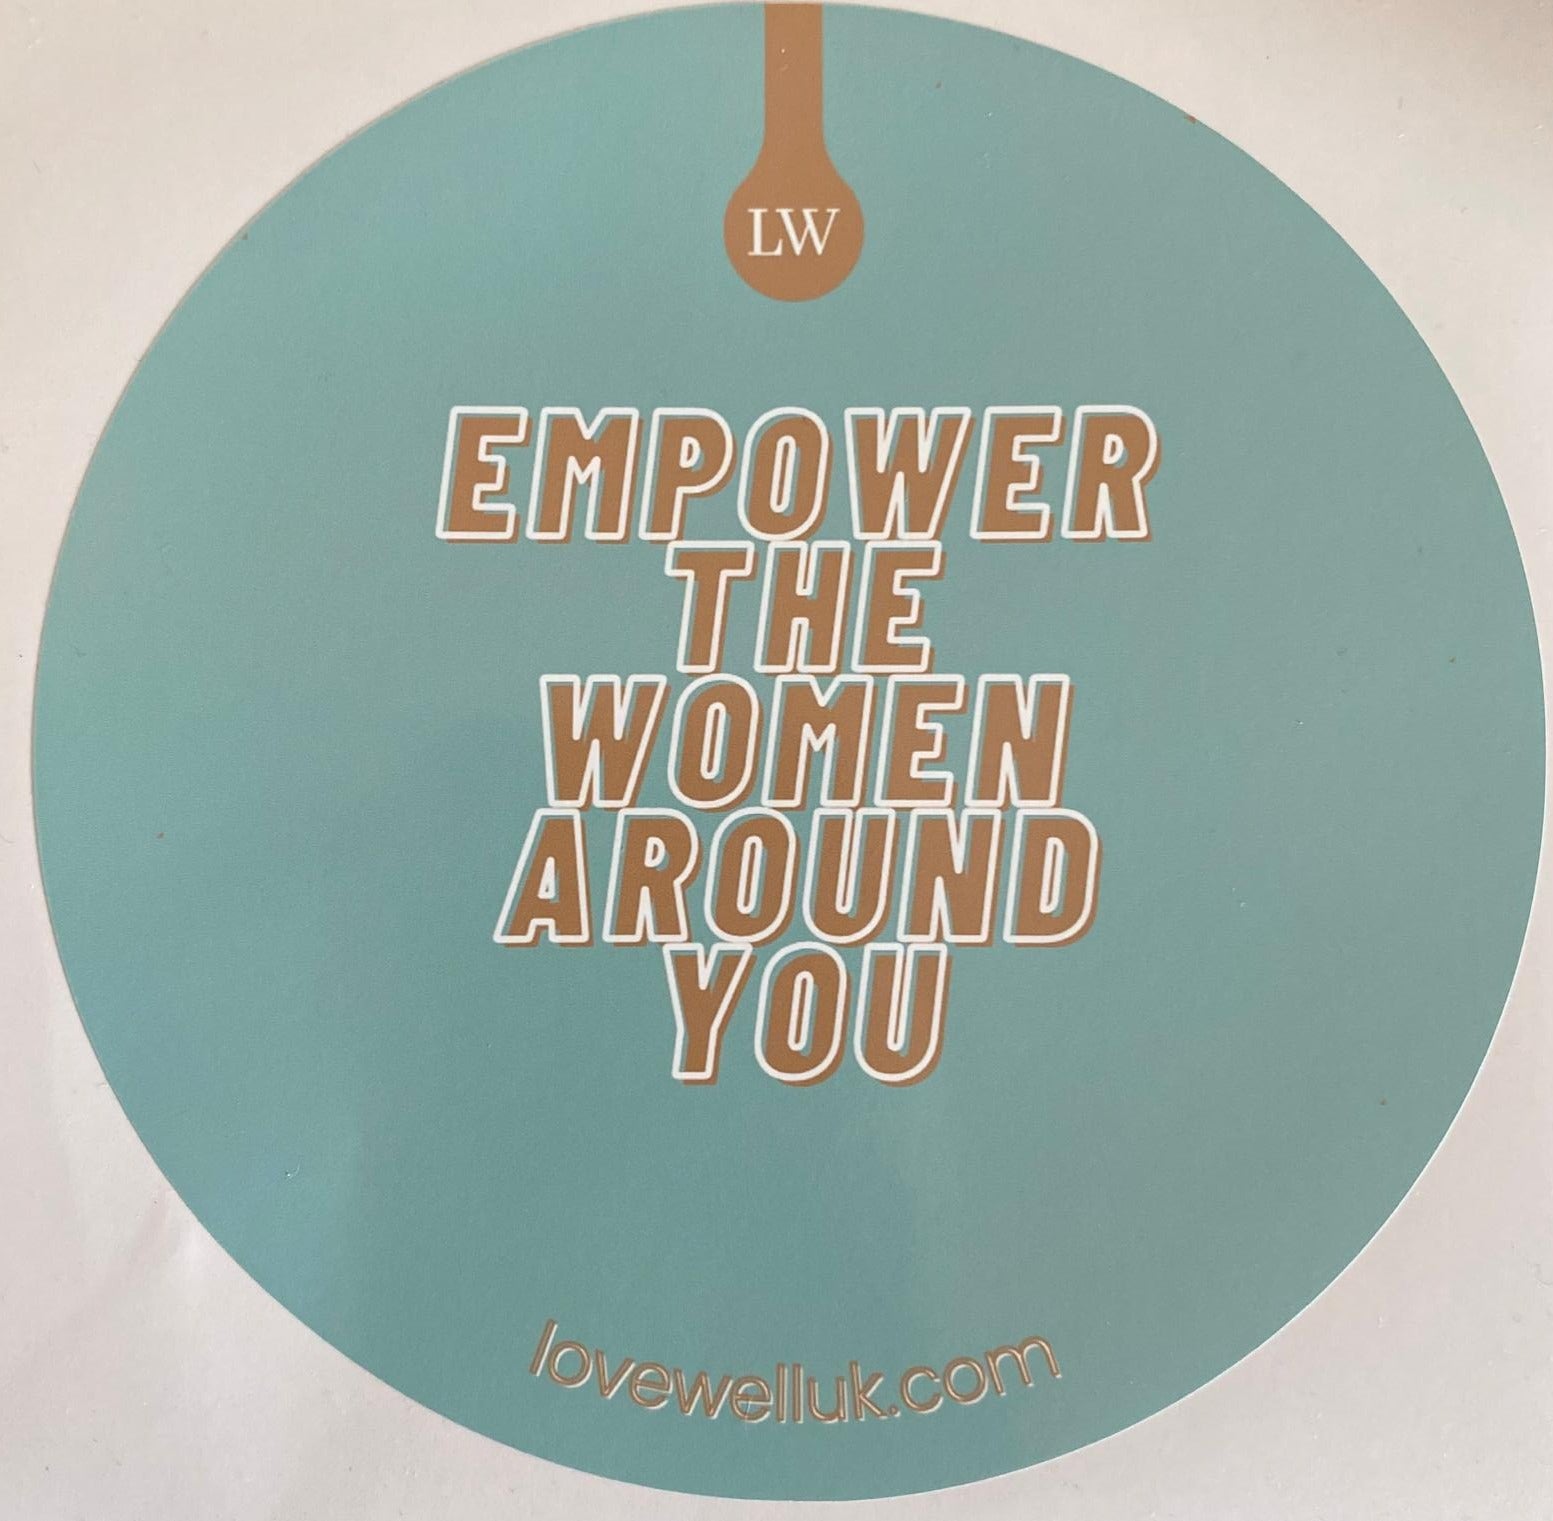 'Empower The Women Around You' stickers